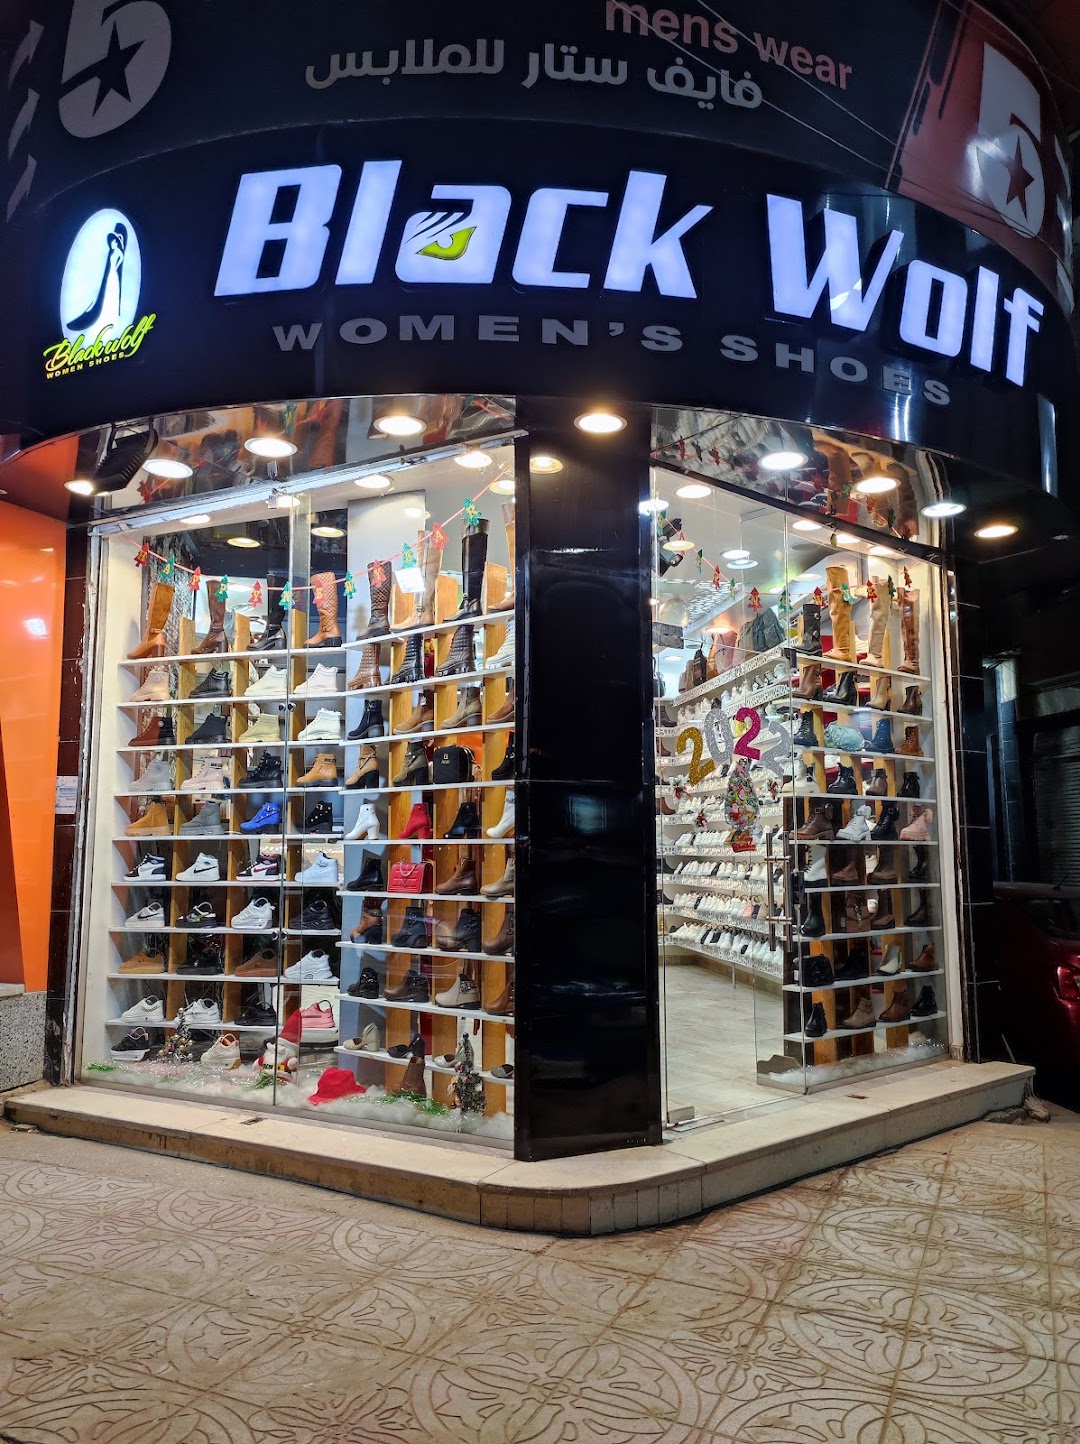 Black wolf women shoes